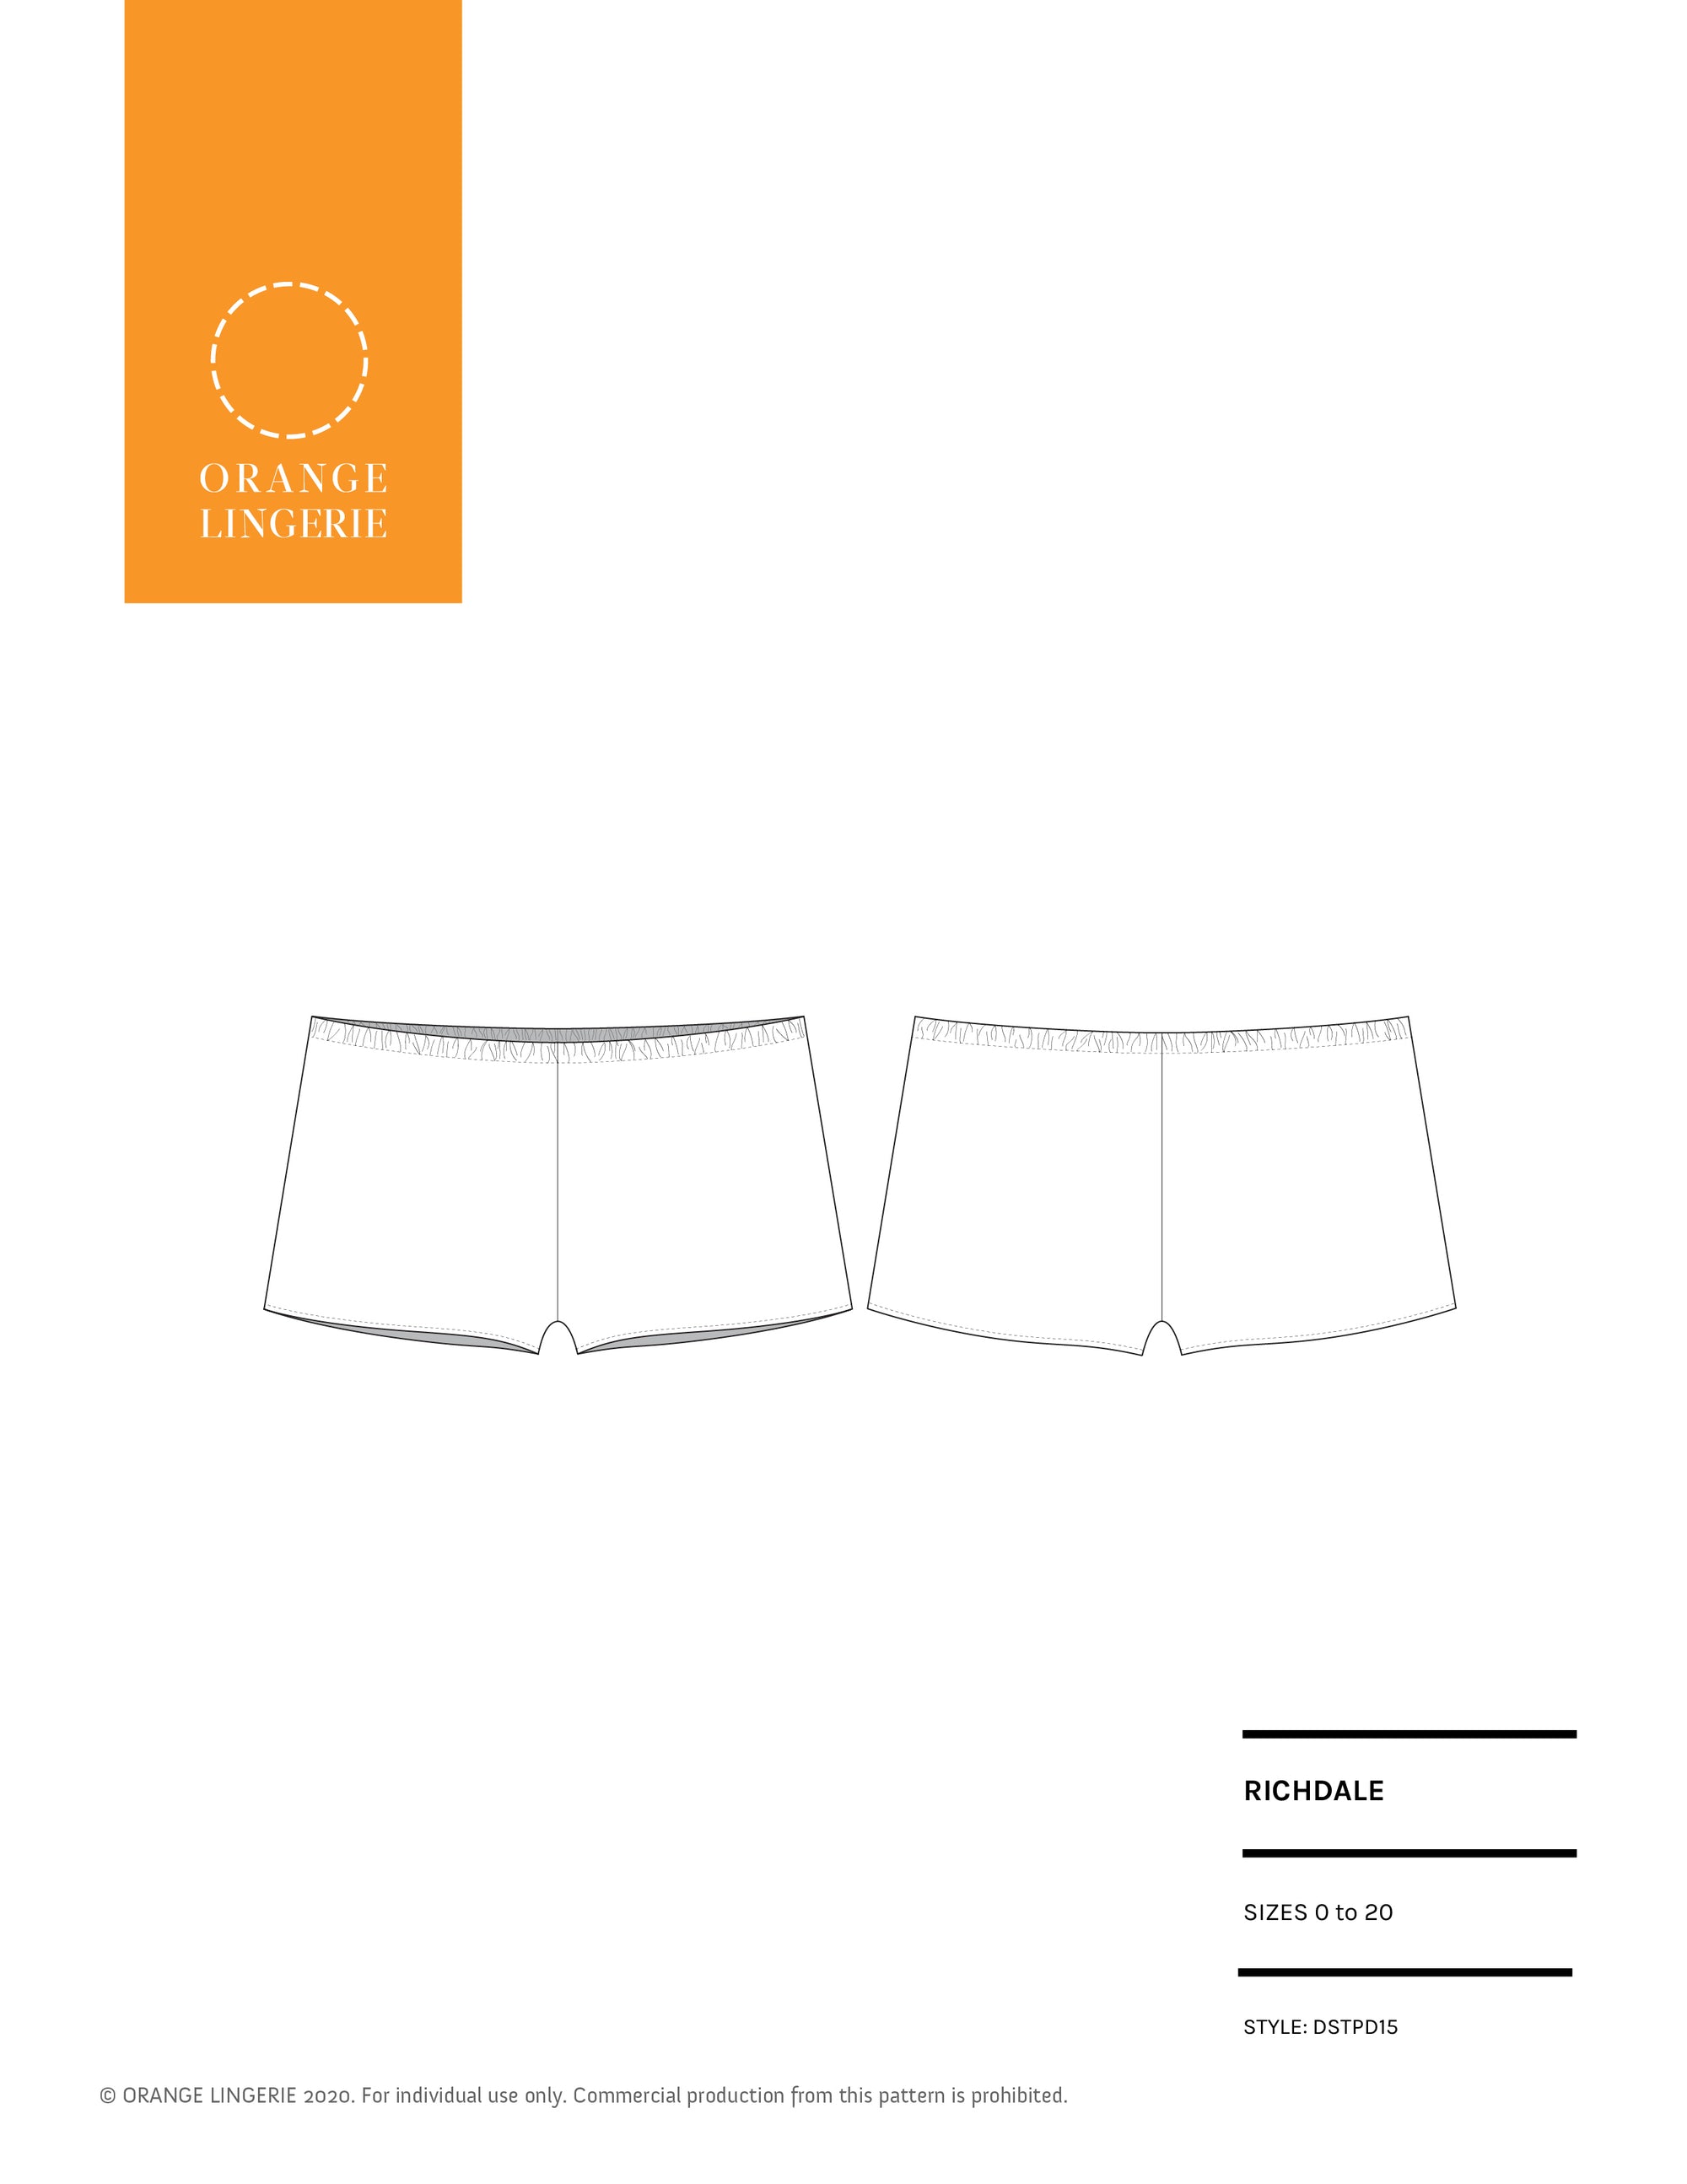 Richdale Tap Shorts Instant Download PDF Sewing Pattern - Orange